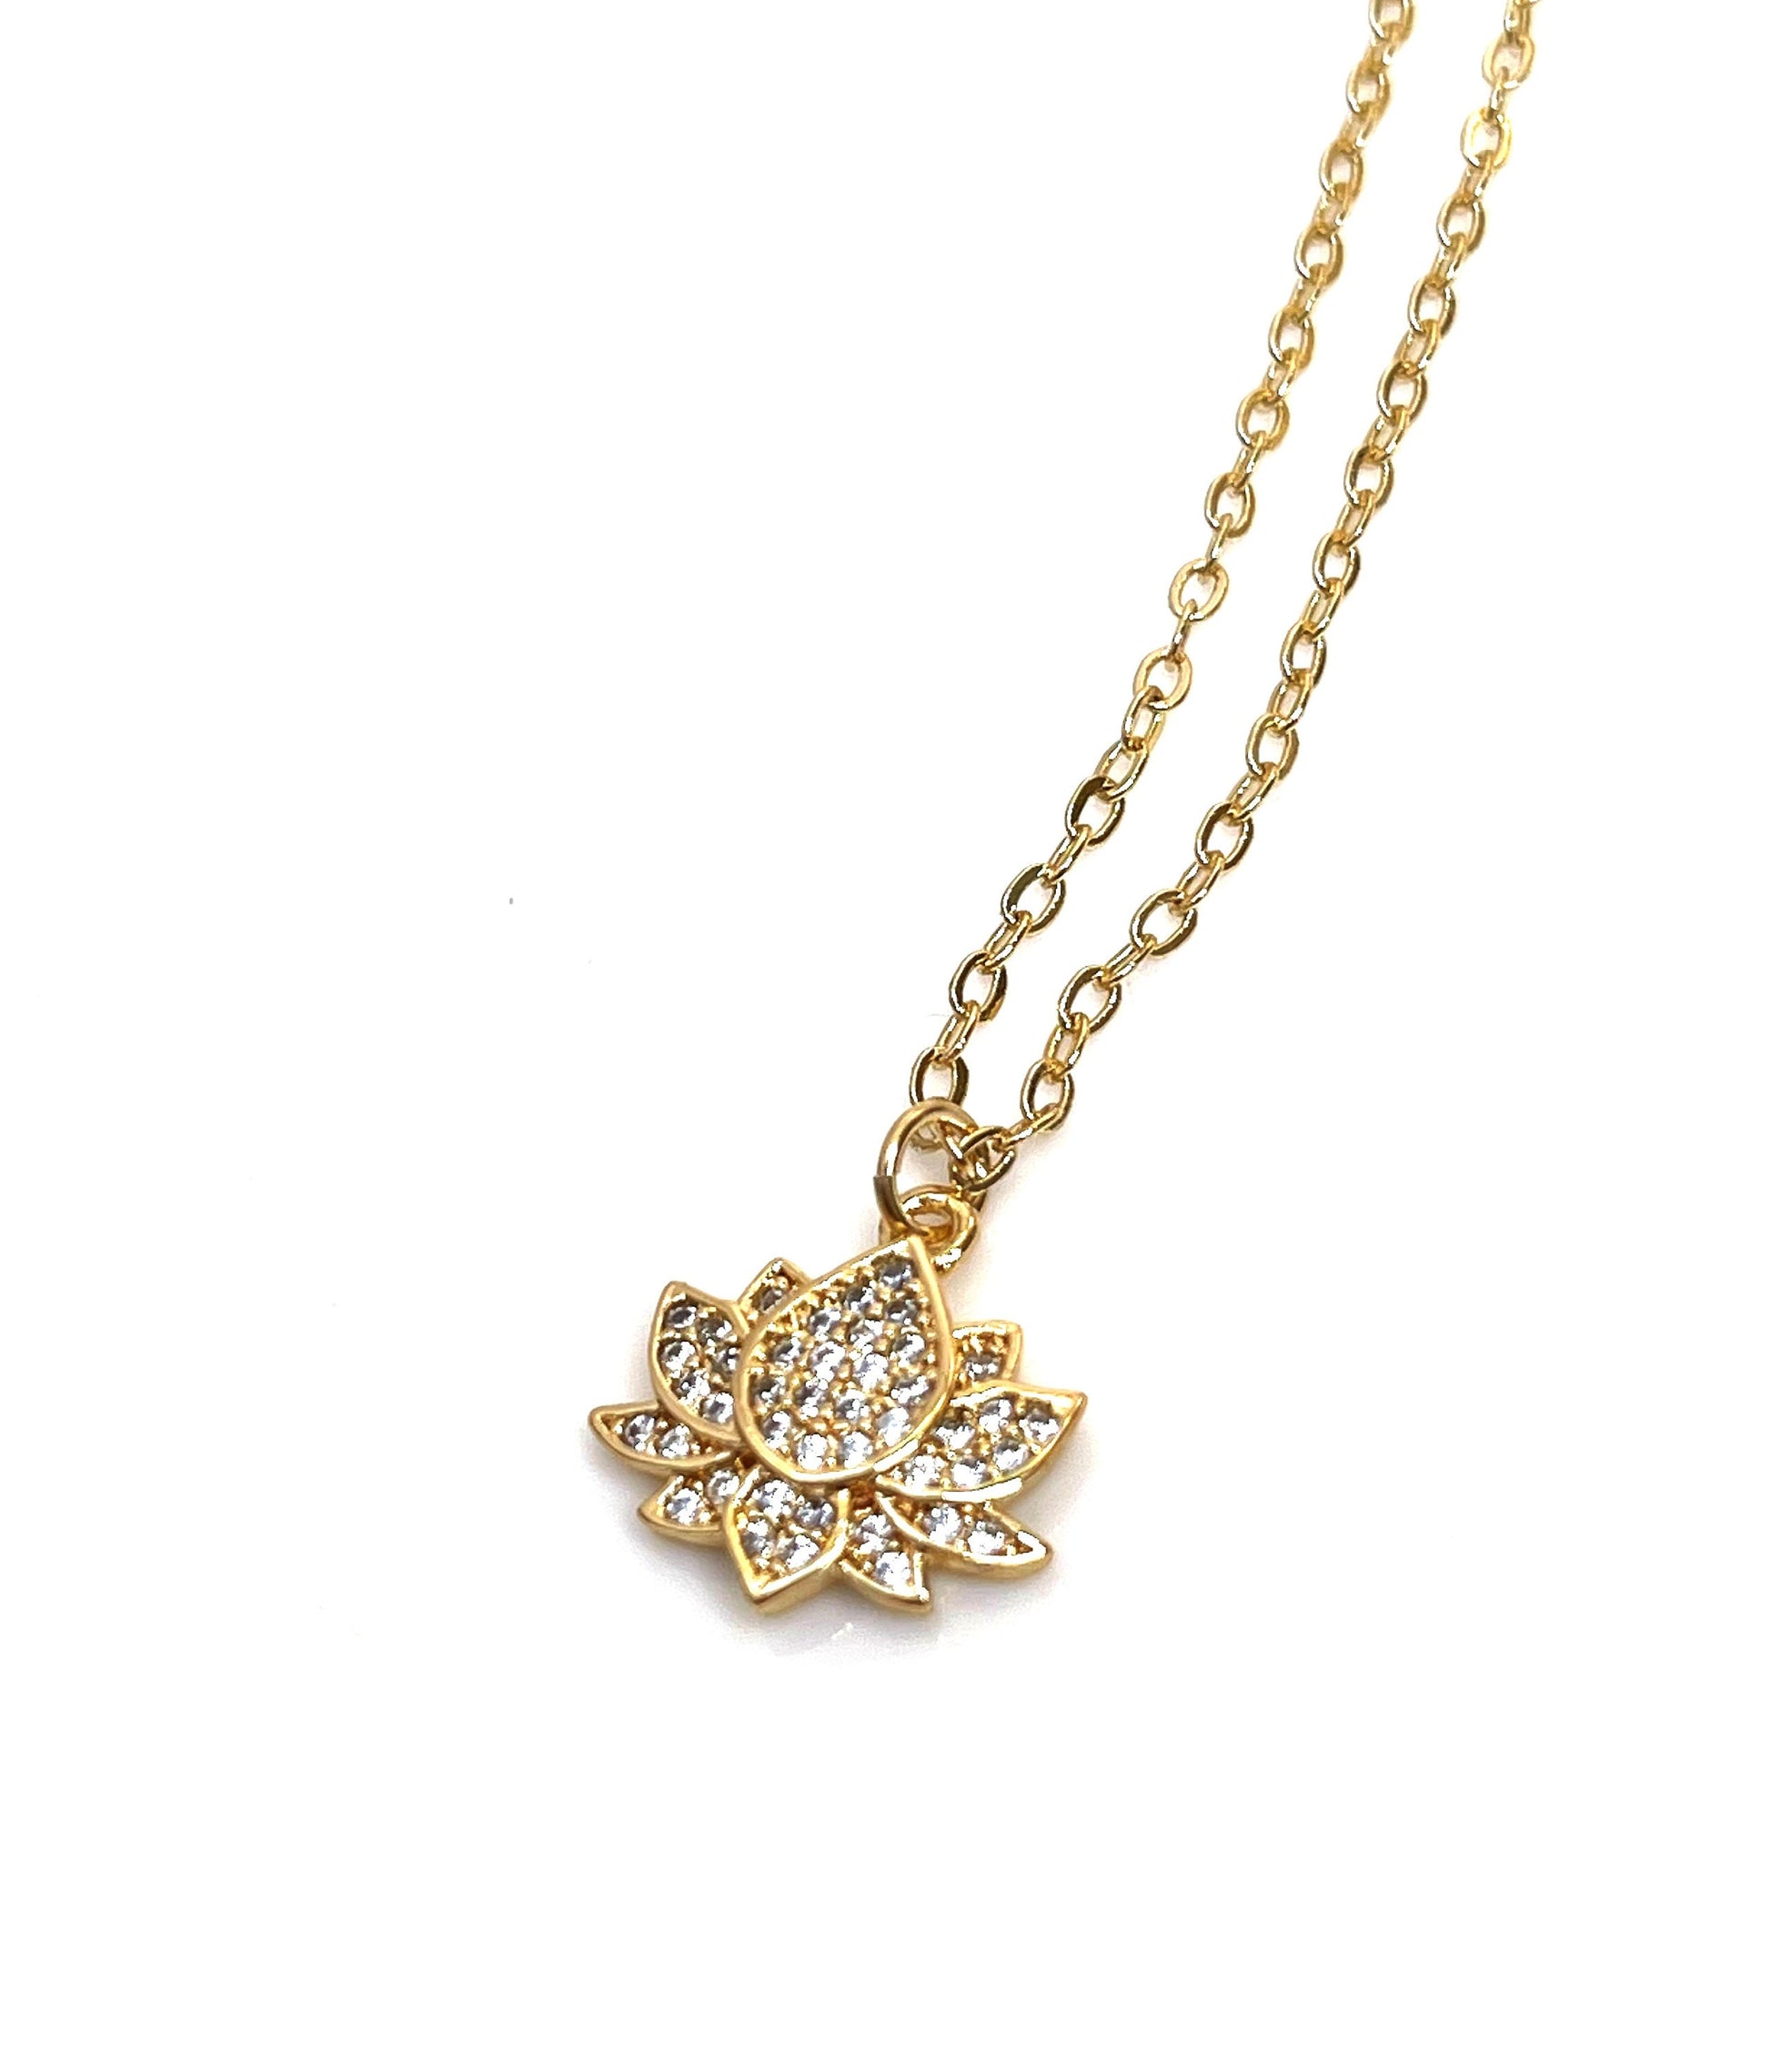 Lotus Flower Crystal Gold Pendant | Indian Flower Pendant | Gold Filled | Minimalist Jewellery